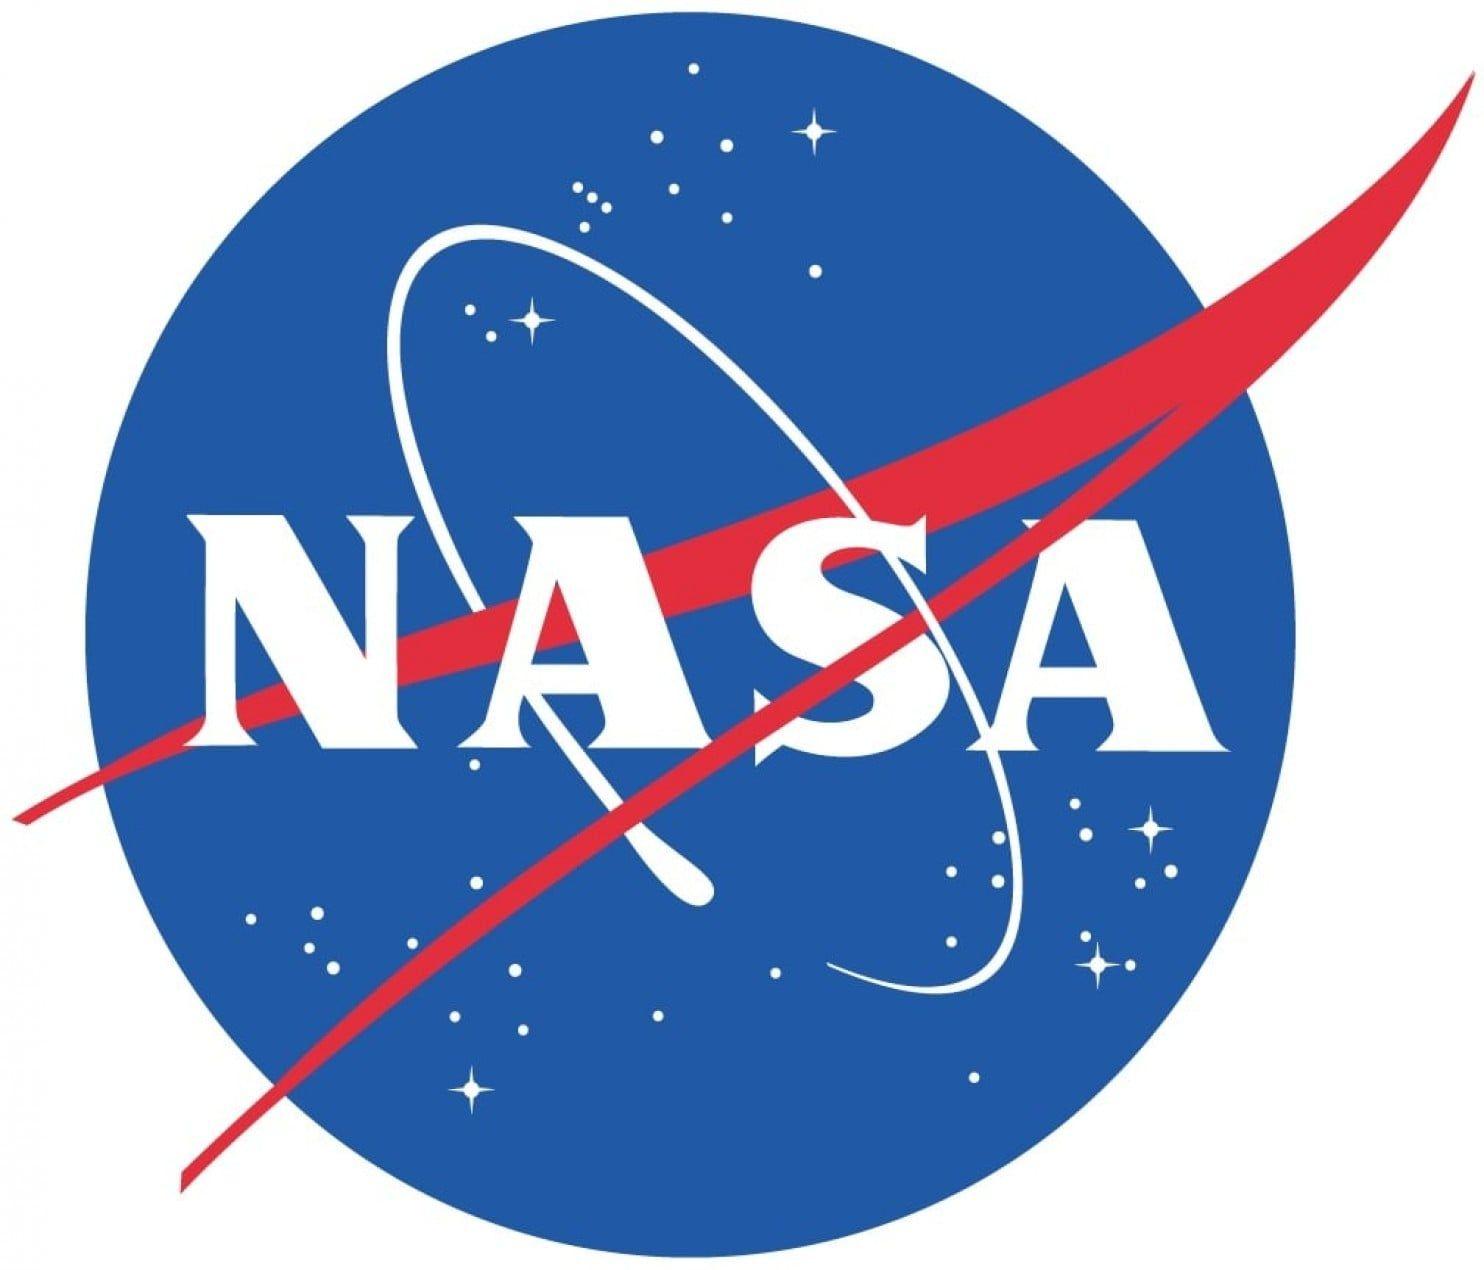 NASA NSA Logo - Hackers accidentally defaced NASA sites. Here's how to tell NASA